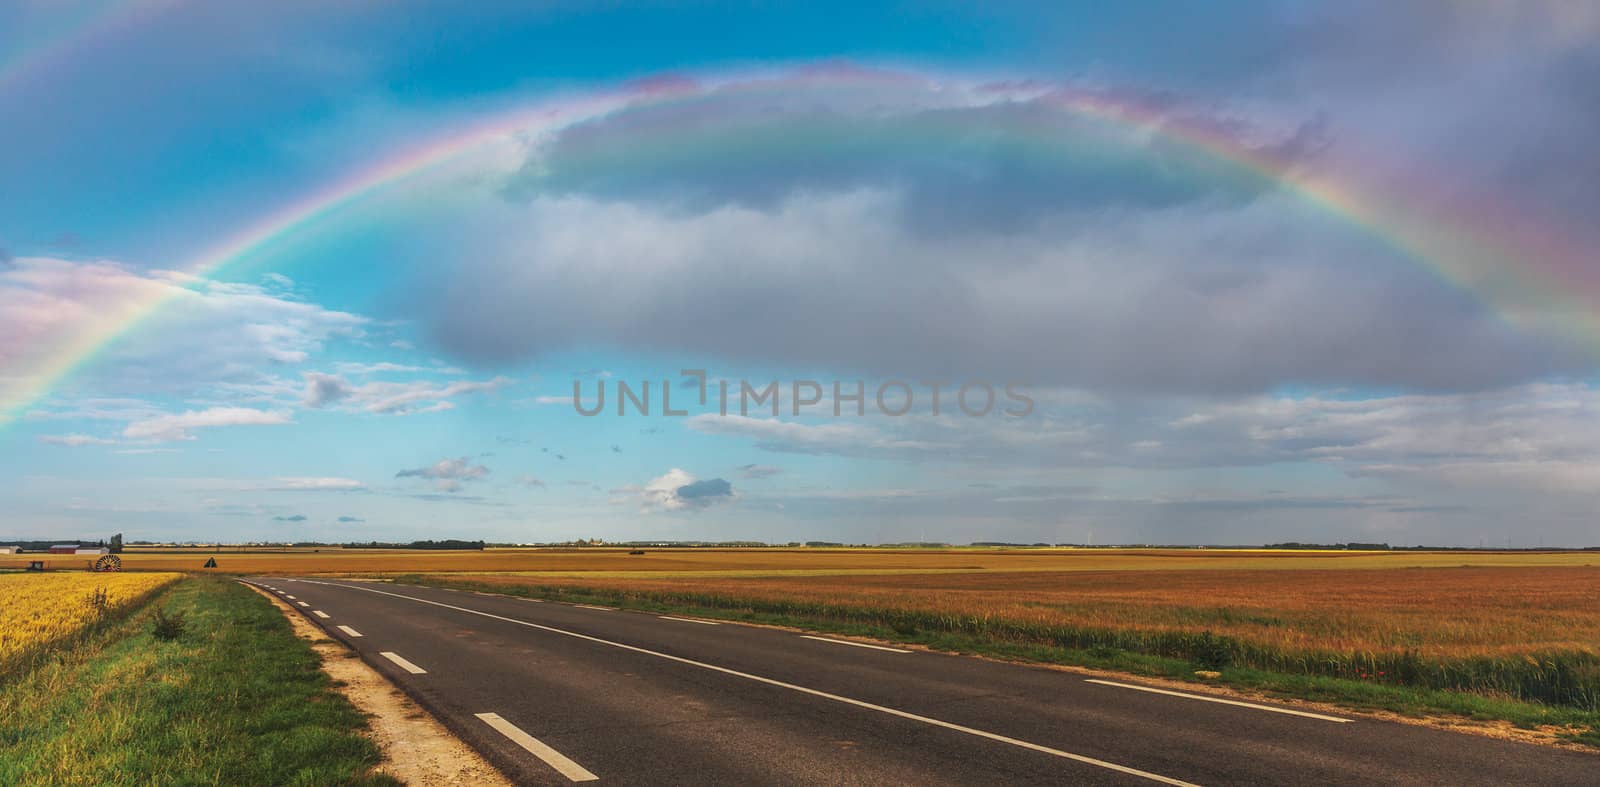 Rainbow Over the Road by RazvanPhotography